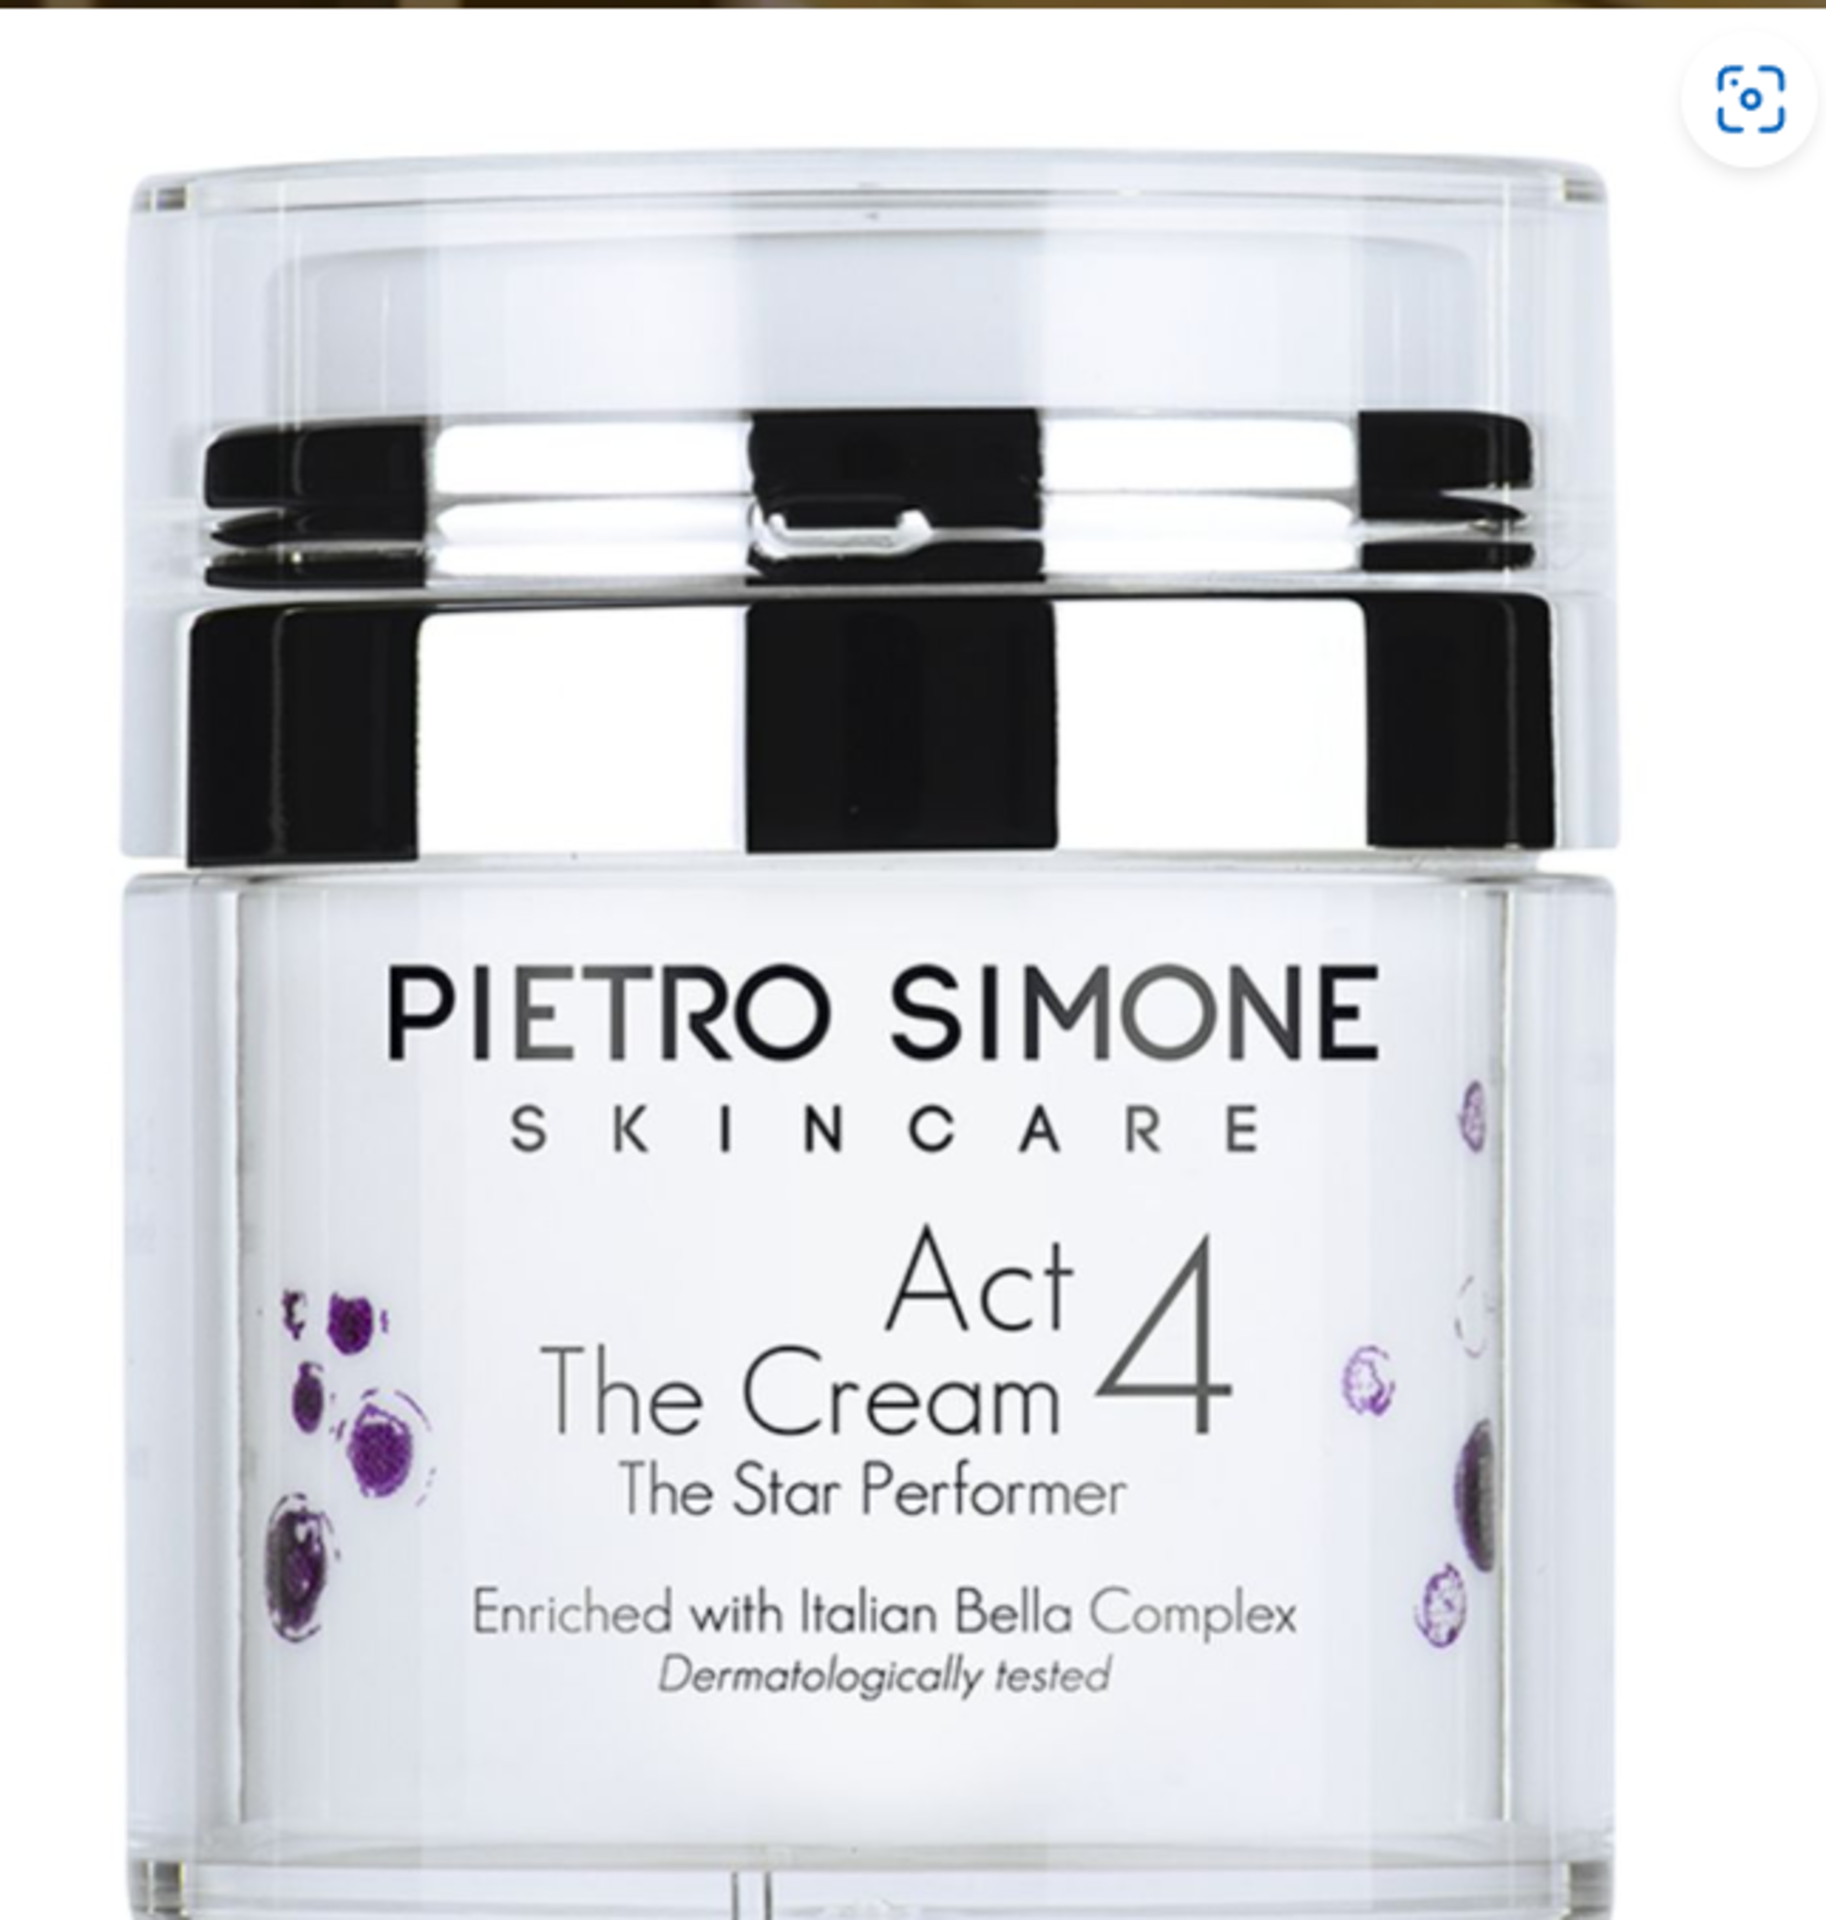 Pietro Simone: Act 4 The Cream (50Ml) RRP £130.00. The application of Pietro Simone's Act 4 The